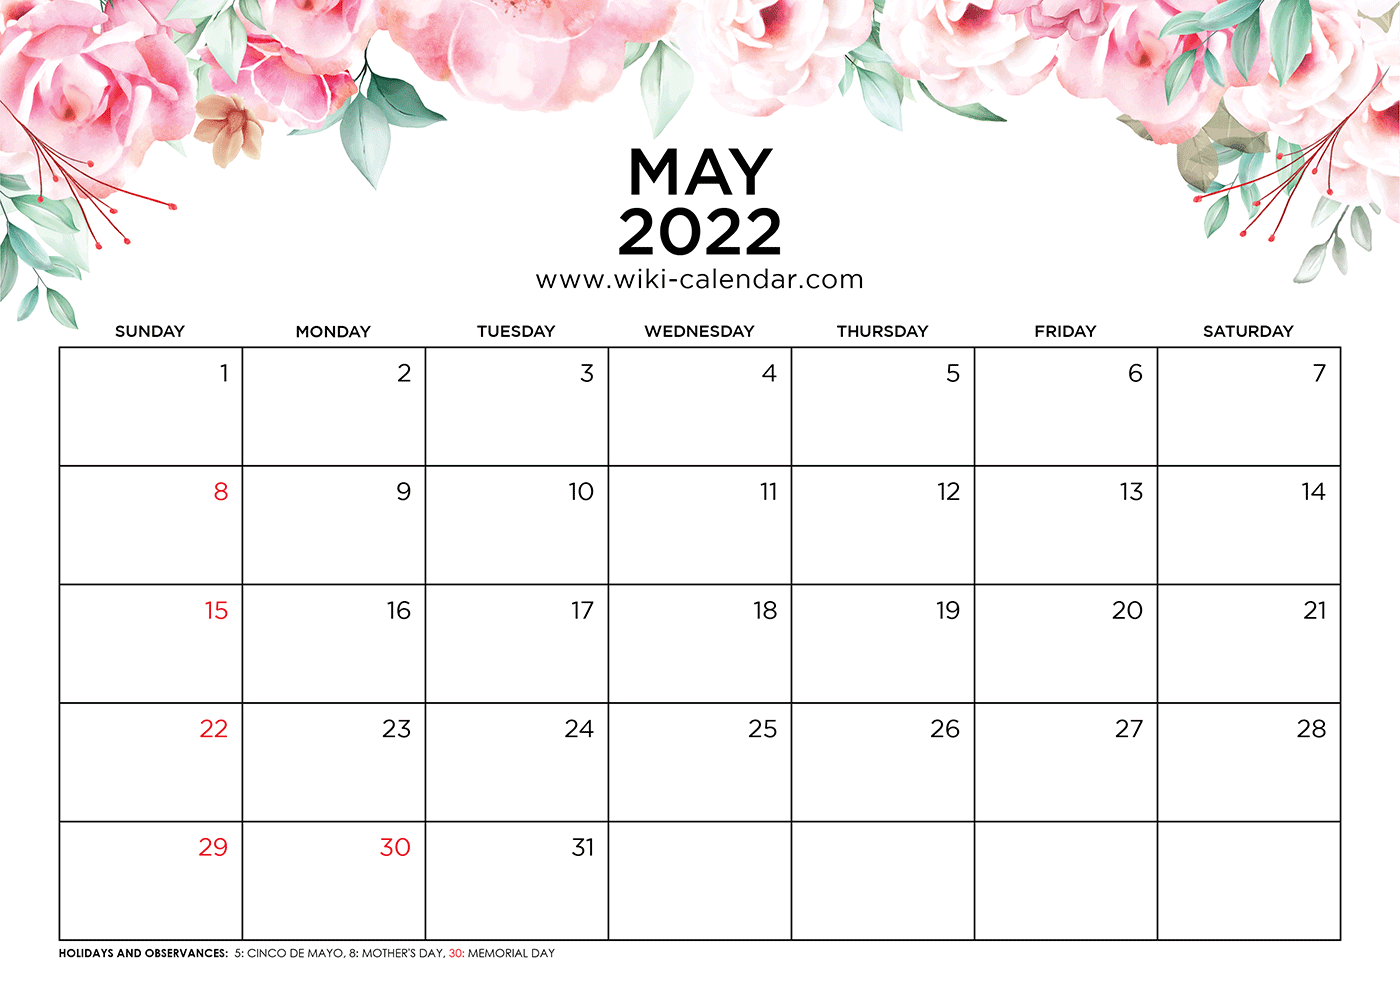 united-states-may-2022-calendar-with-holidays-free-printable-may-2022-calendars-wiki-calendar